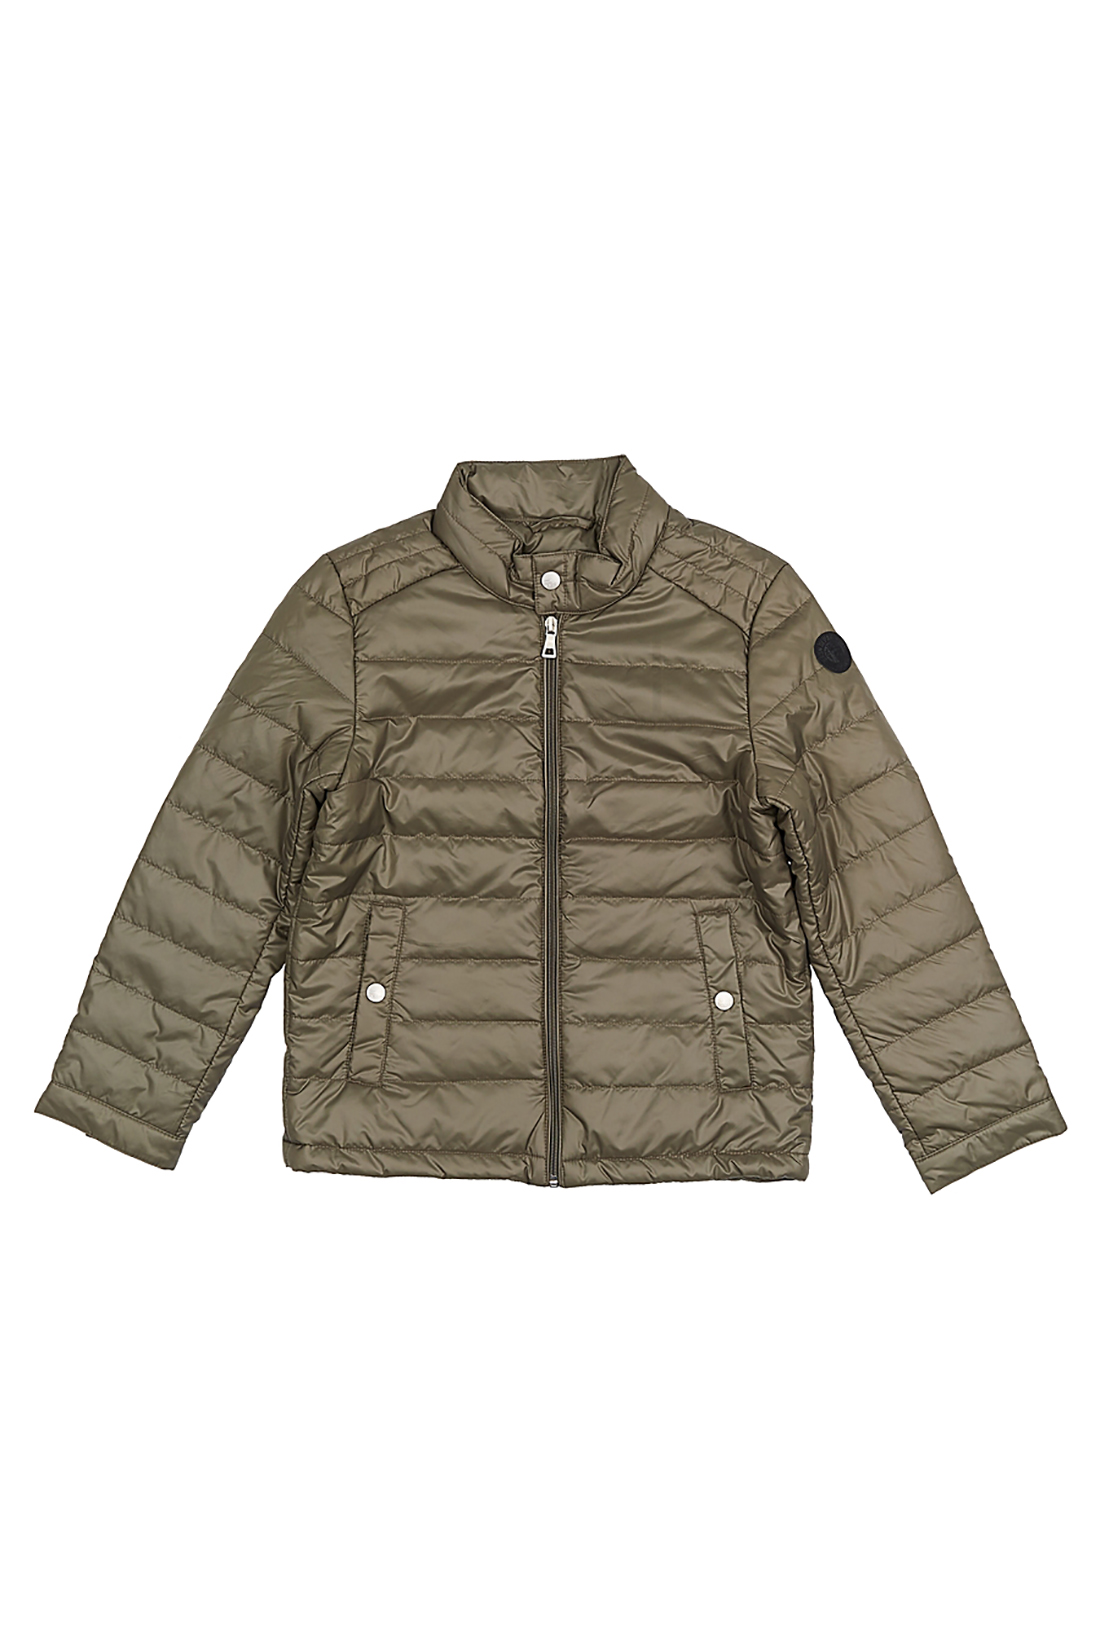 Куртка для мальчика (арт. baon BJ538002), размер 158-164, цвет зеленый Куртка для мальчика (арт. baon BJ538002) - фото 5